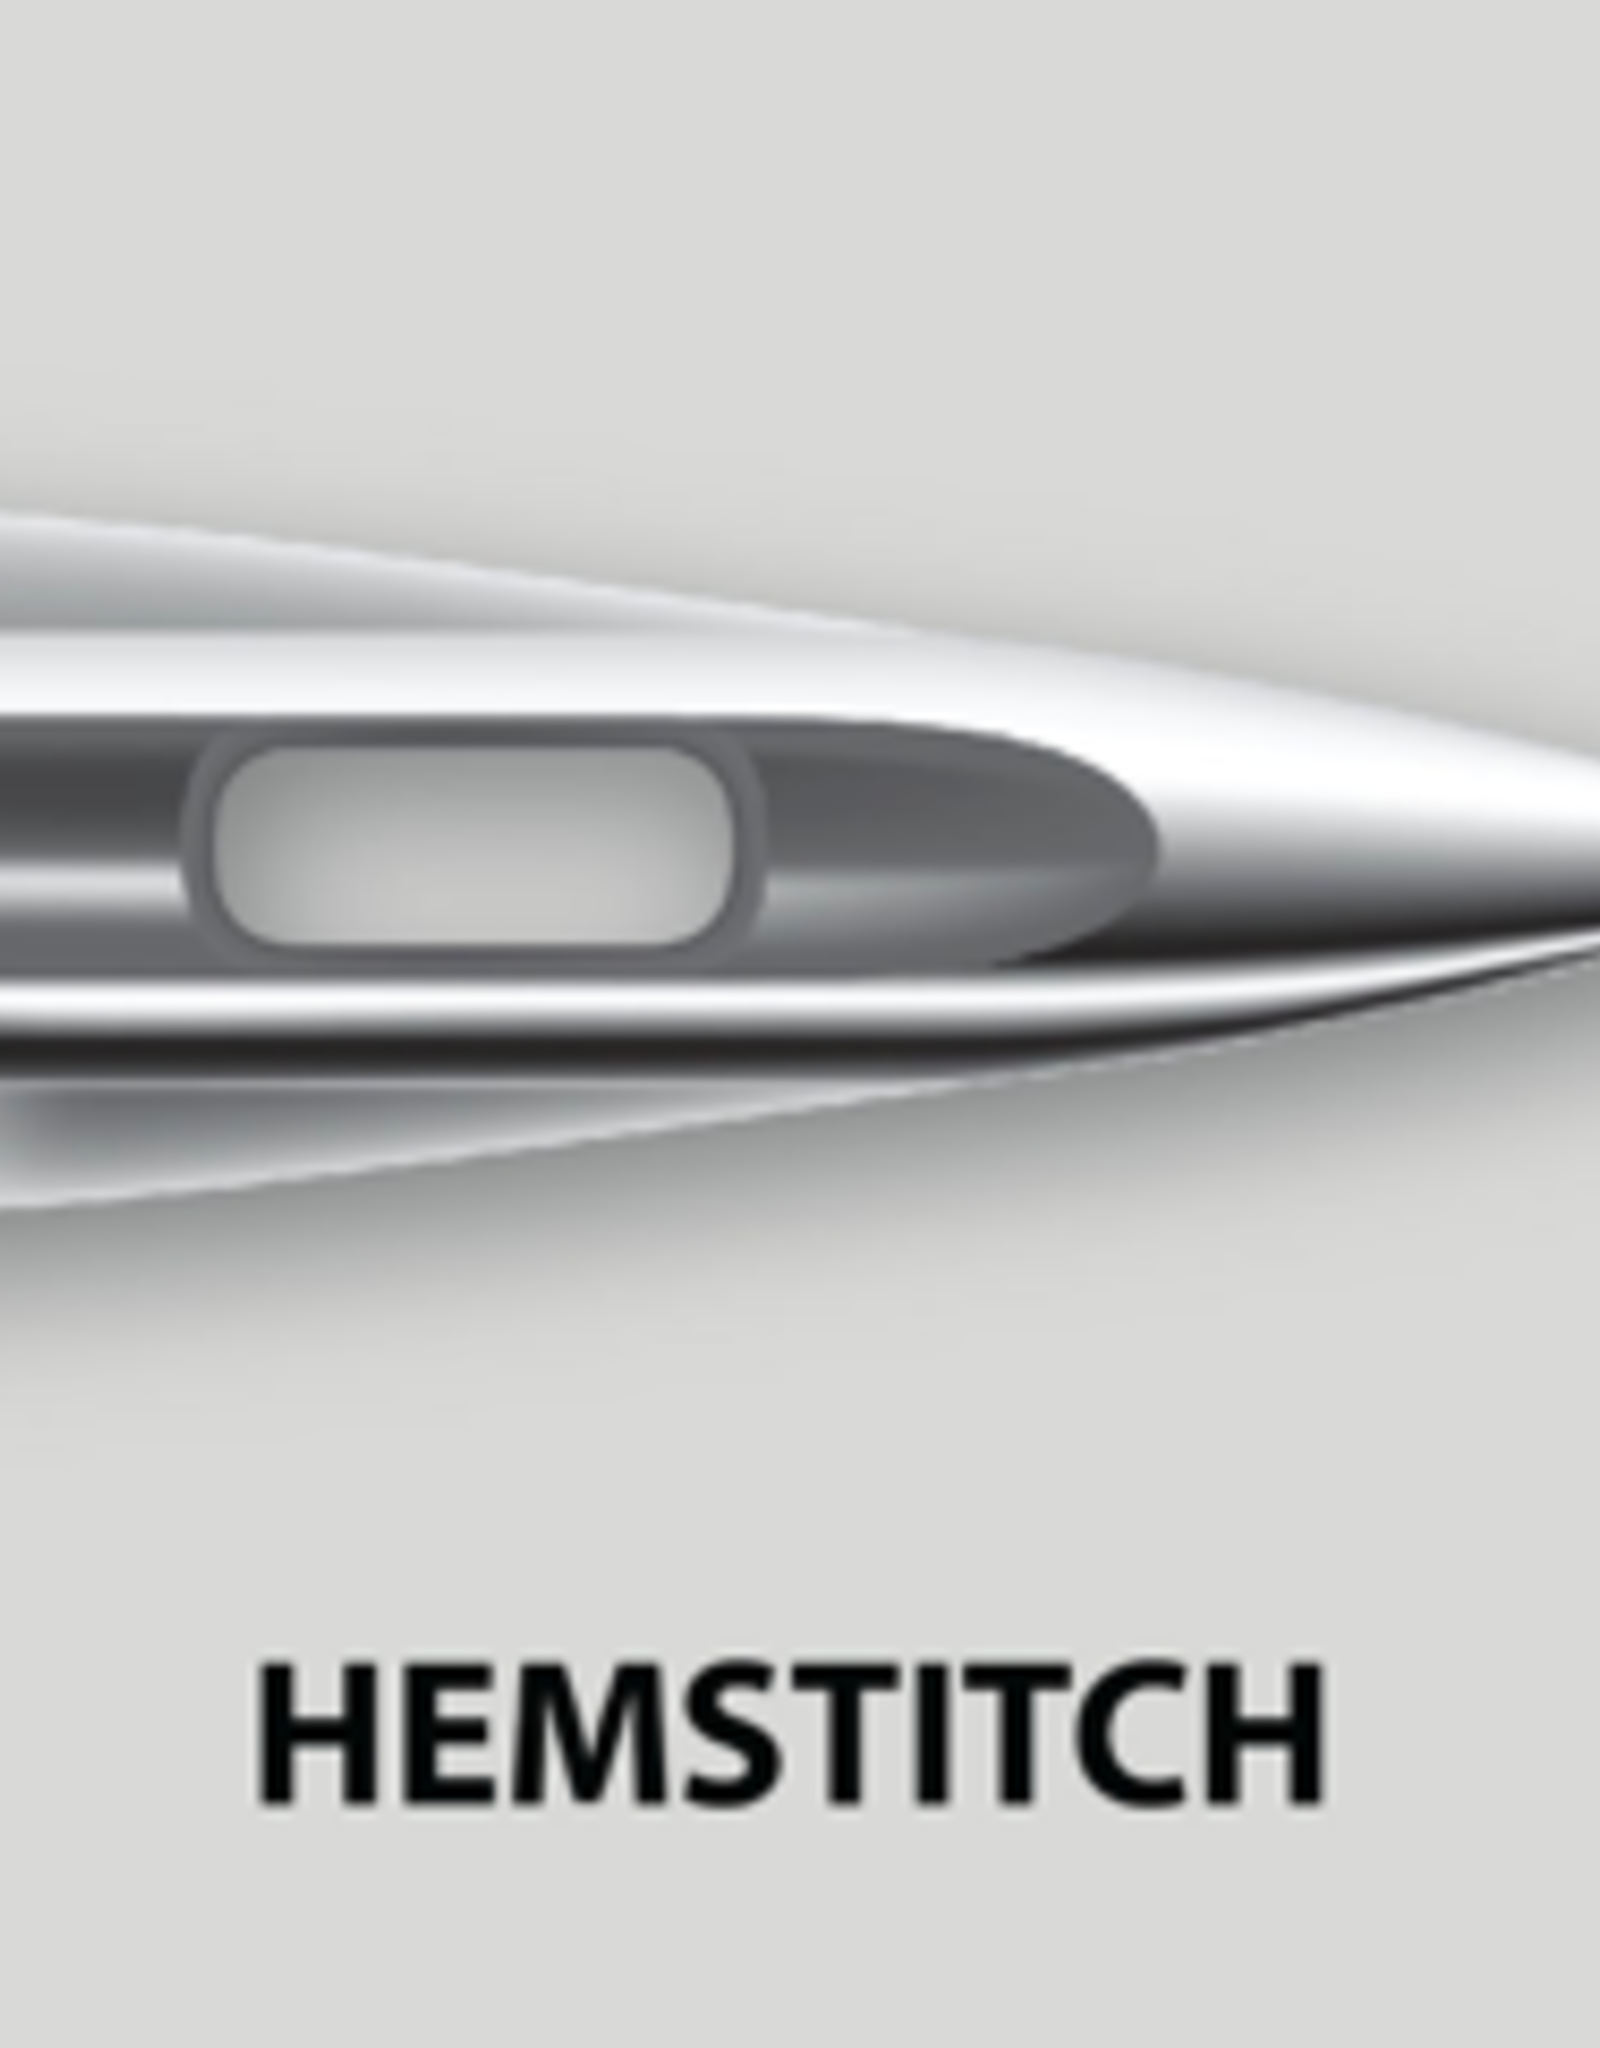 Klasse Hemstitch wing size 100 - 4.0mm